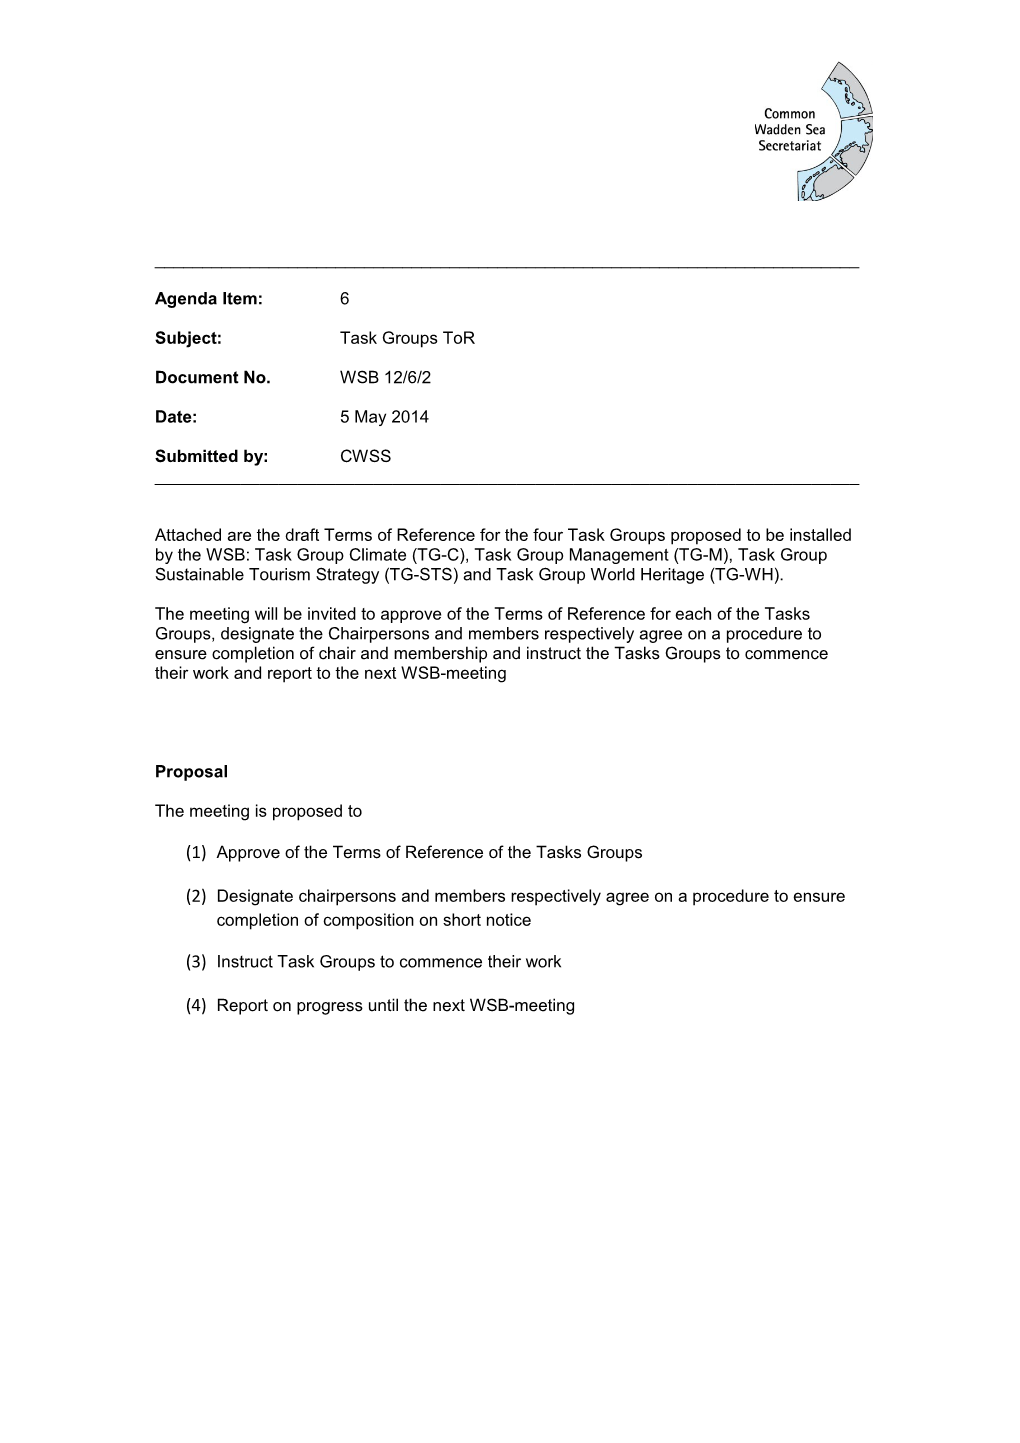 WSB 12-6-2-Task Groups Tor (14-05-05)Page 1